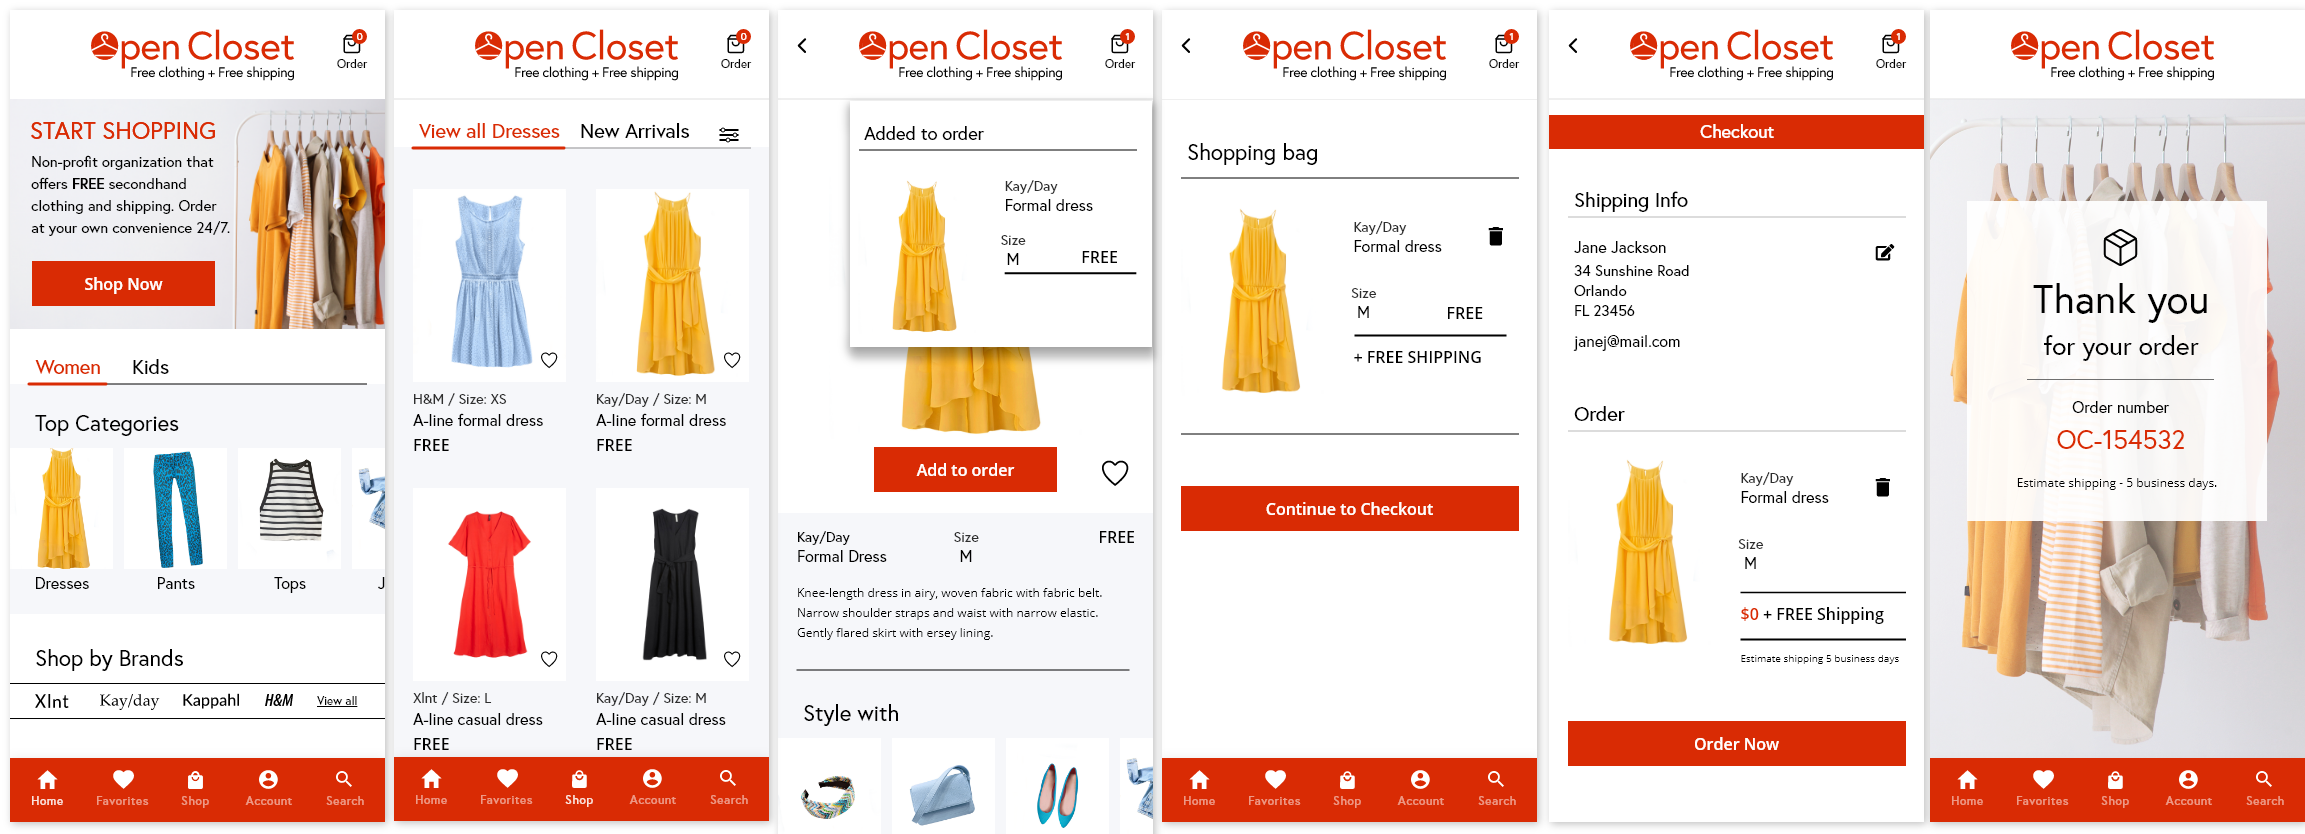 Open Closet dedicated mobile app